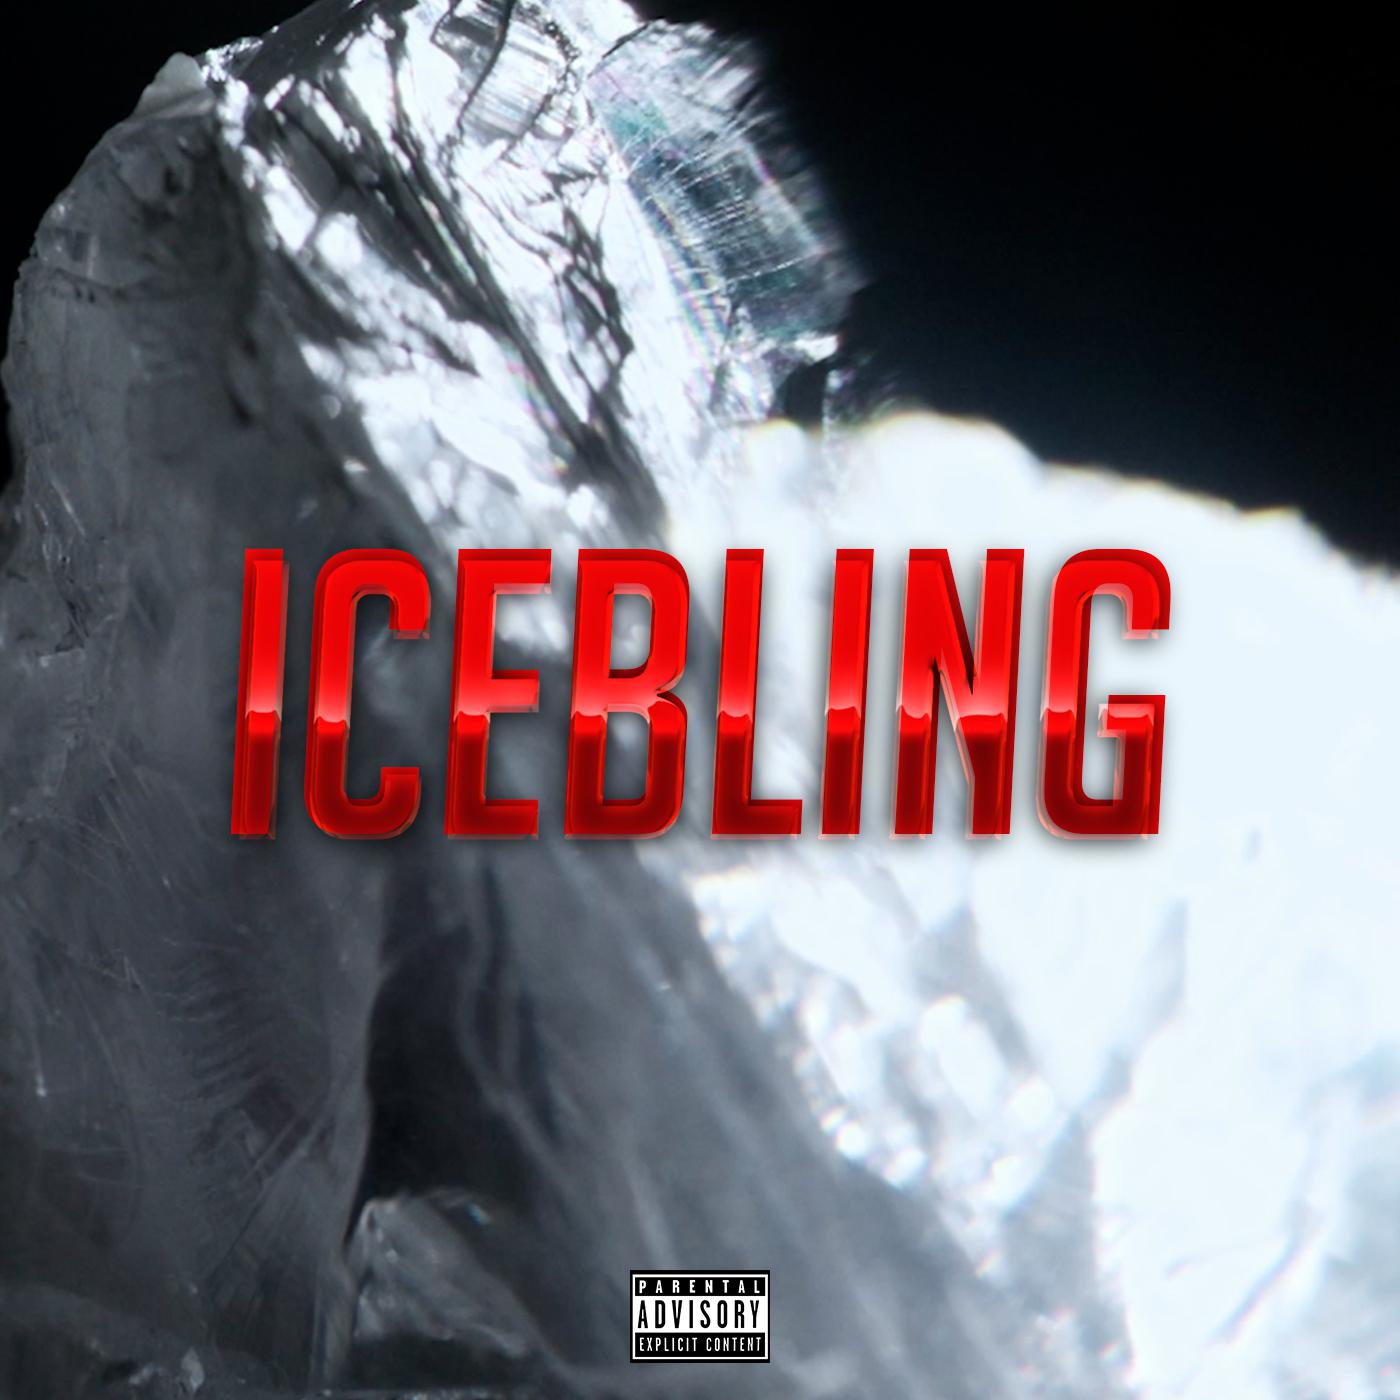 Icebling